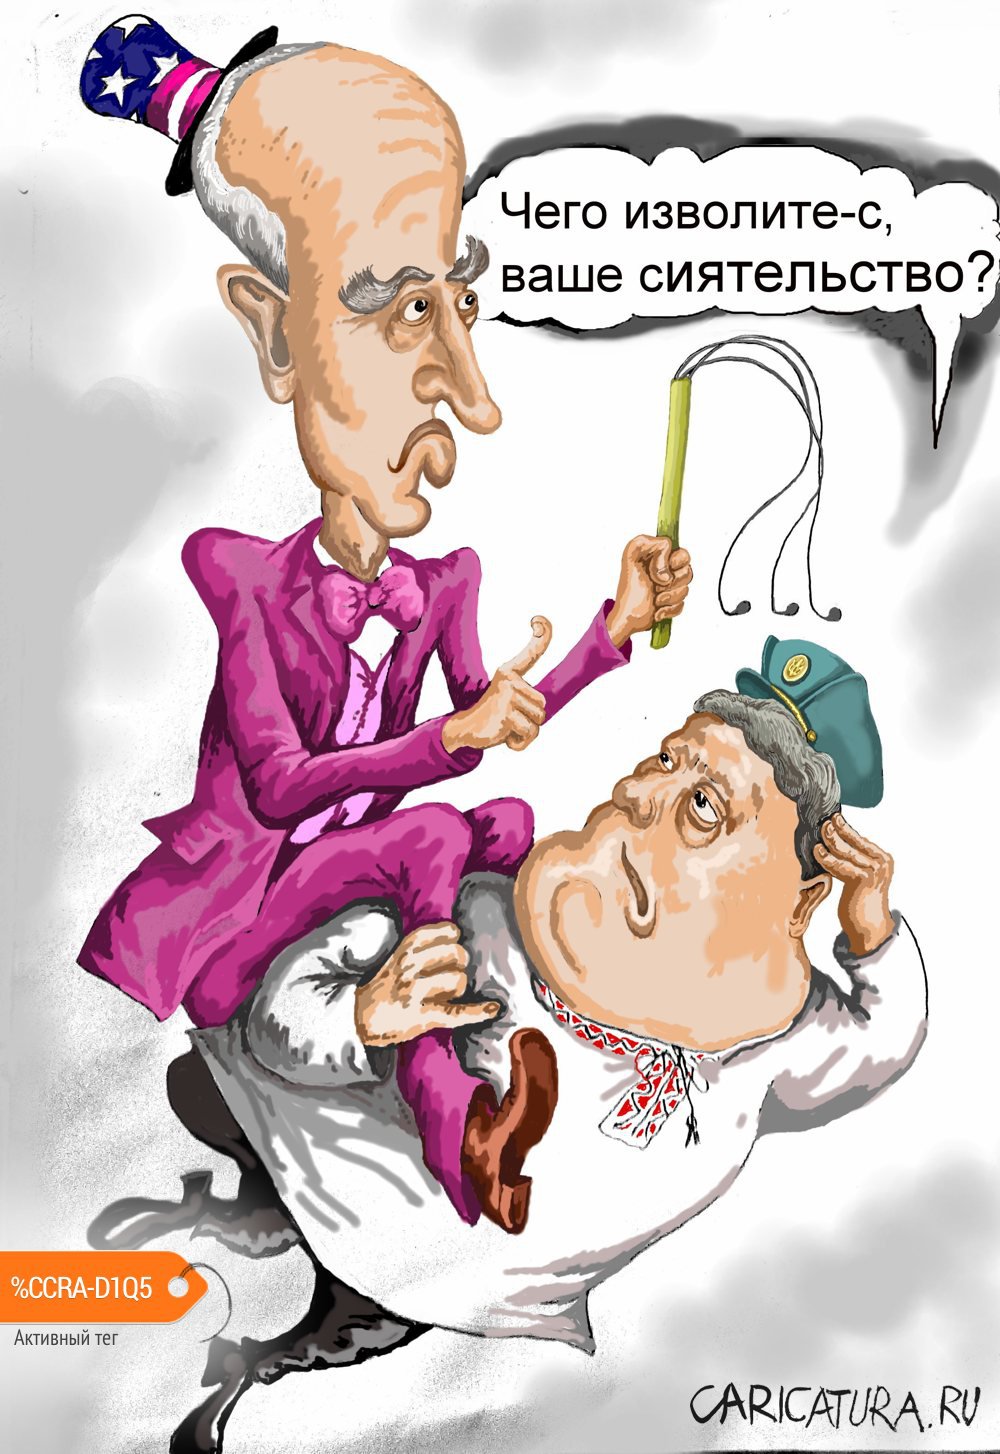 Карикатура "Ковбой и кляча", Георгий Майоренко